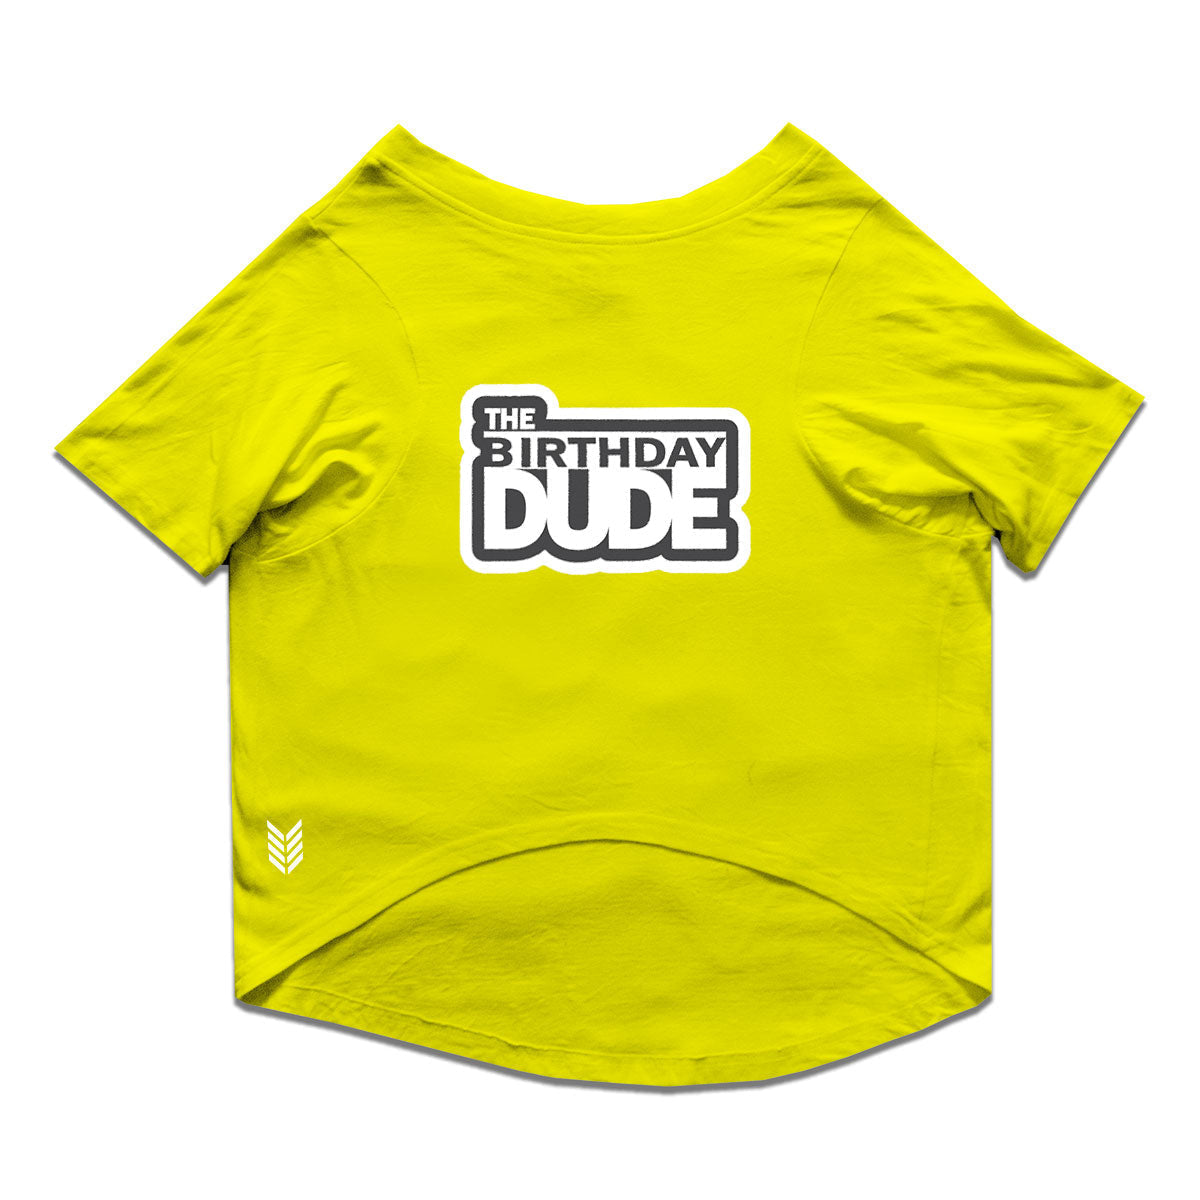 Ruse / Yellow Ruse Basic Crew Neck 'The Birthday Dude' Printed Half Sleeves Dog Tee12